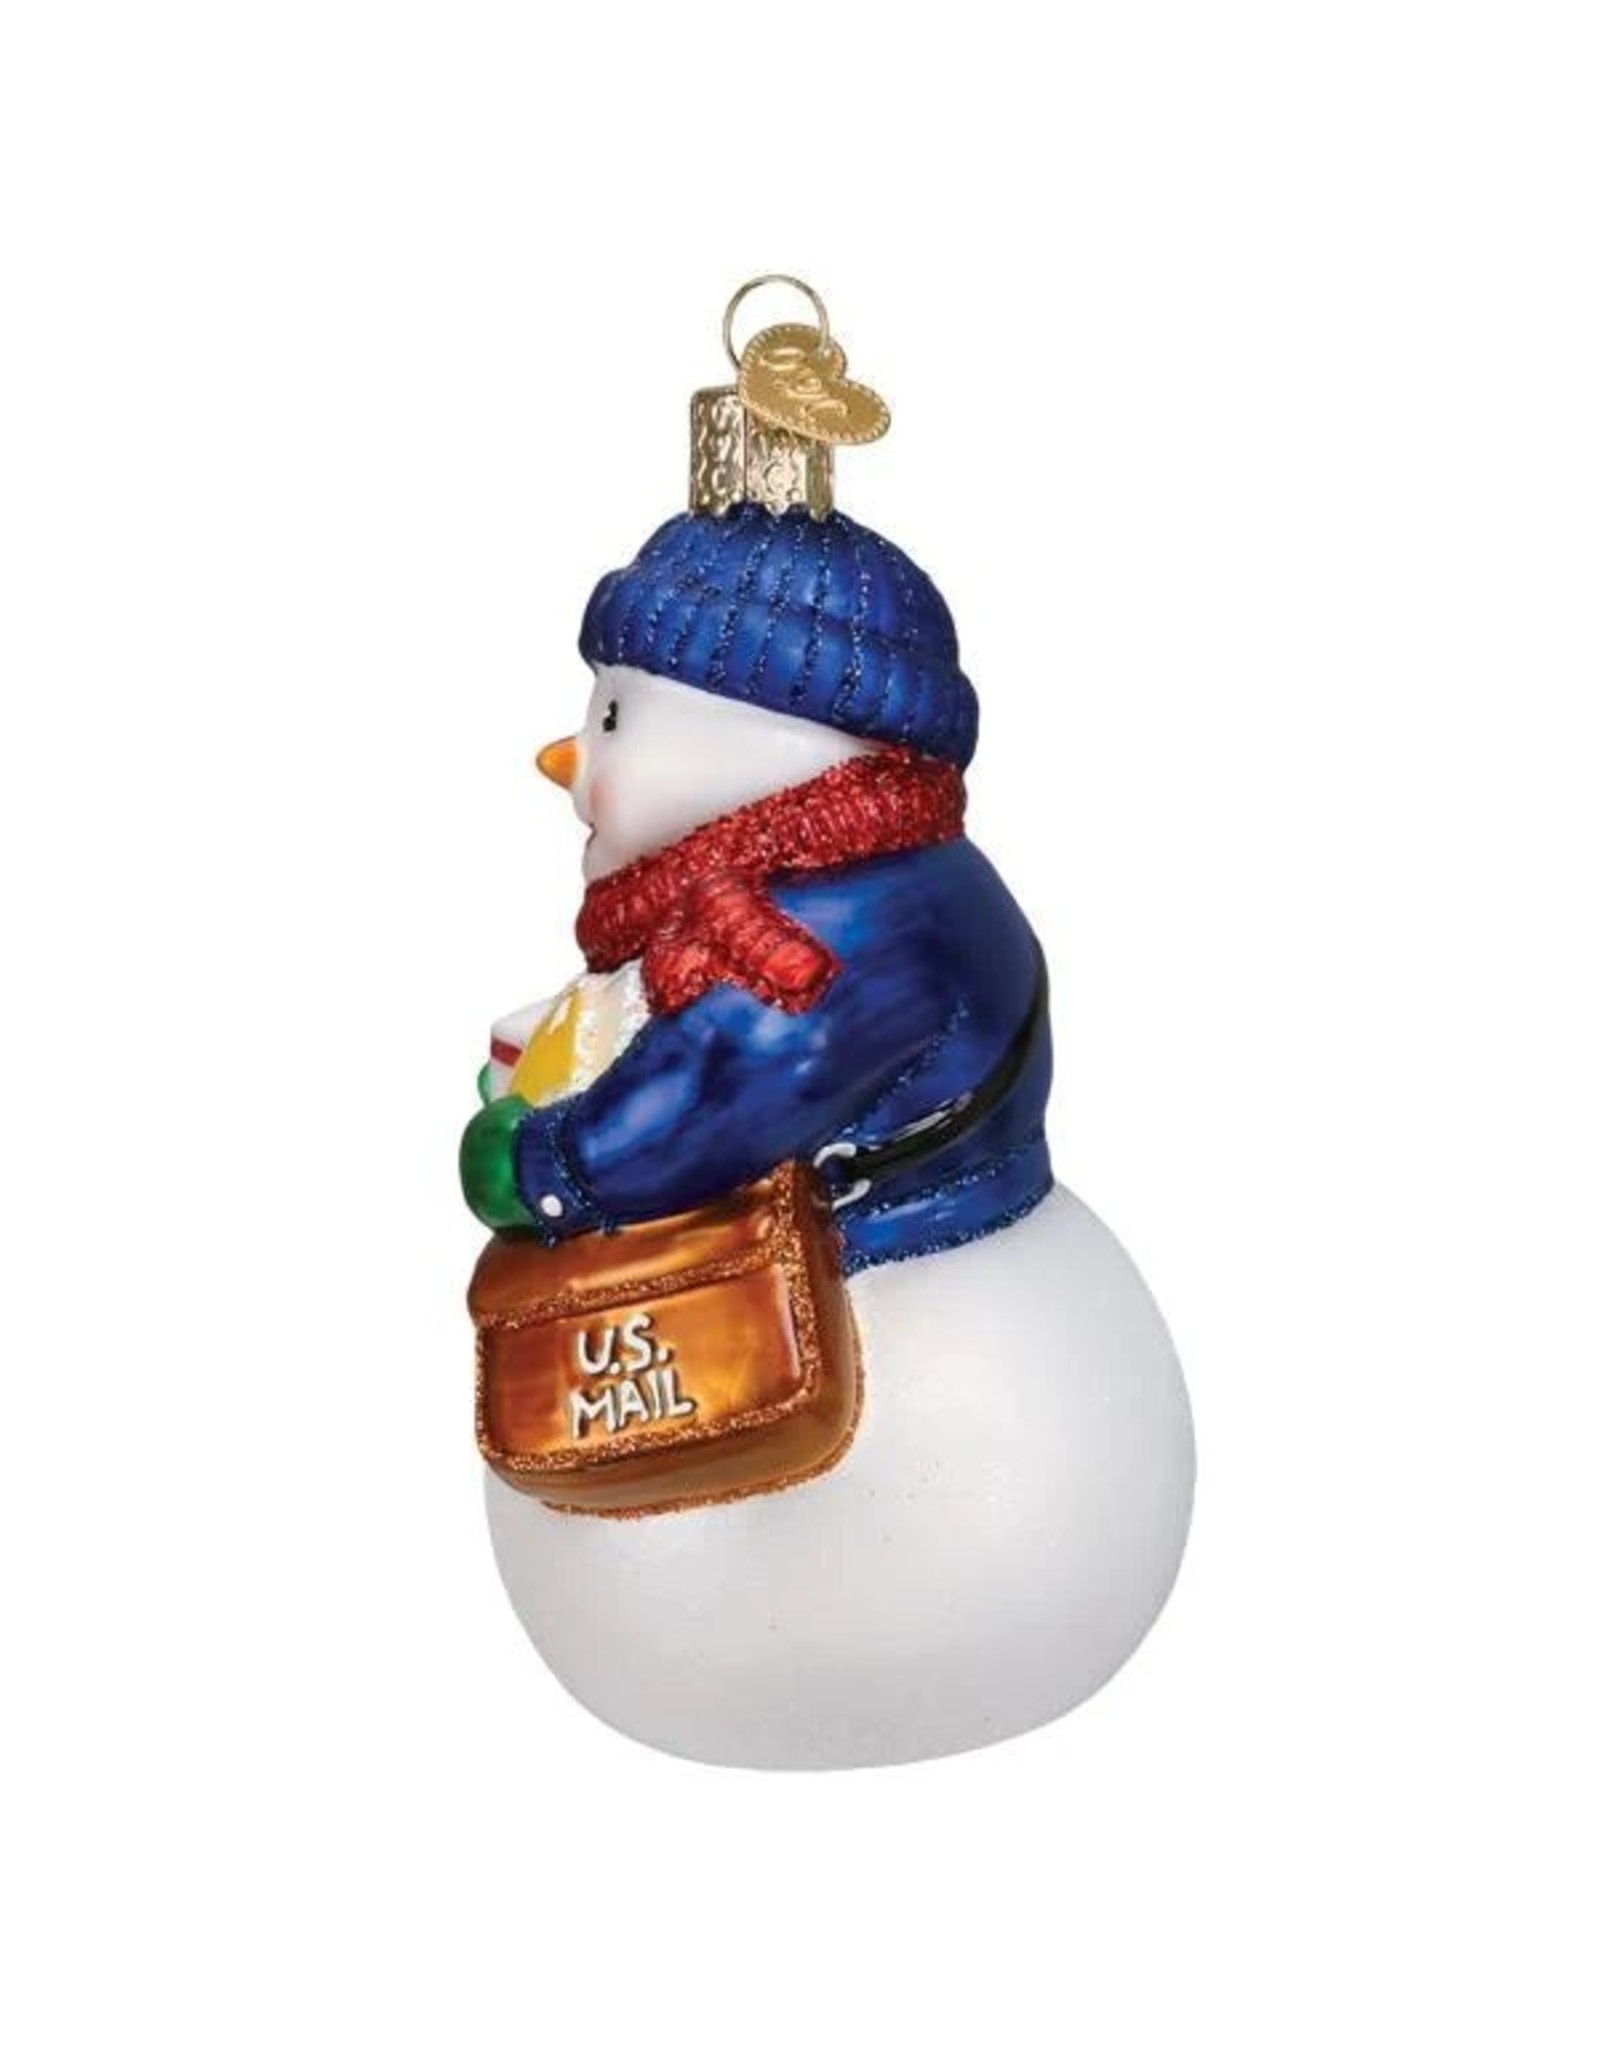 Old World Christmas USPS Snowman Ornament